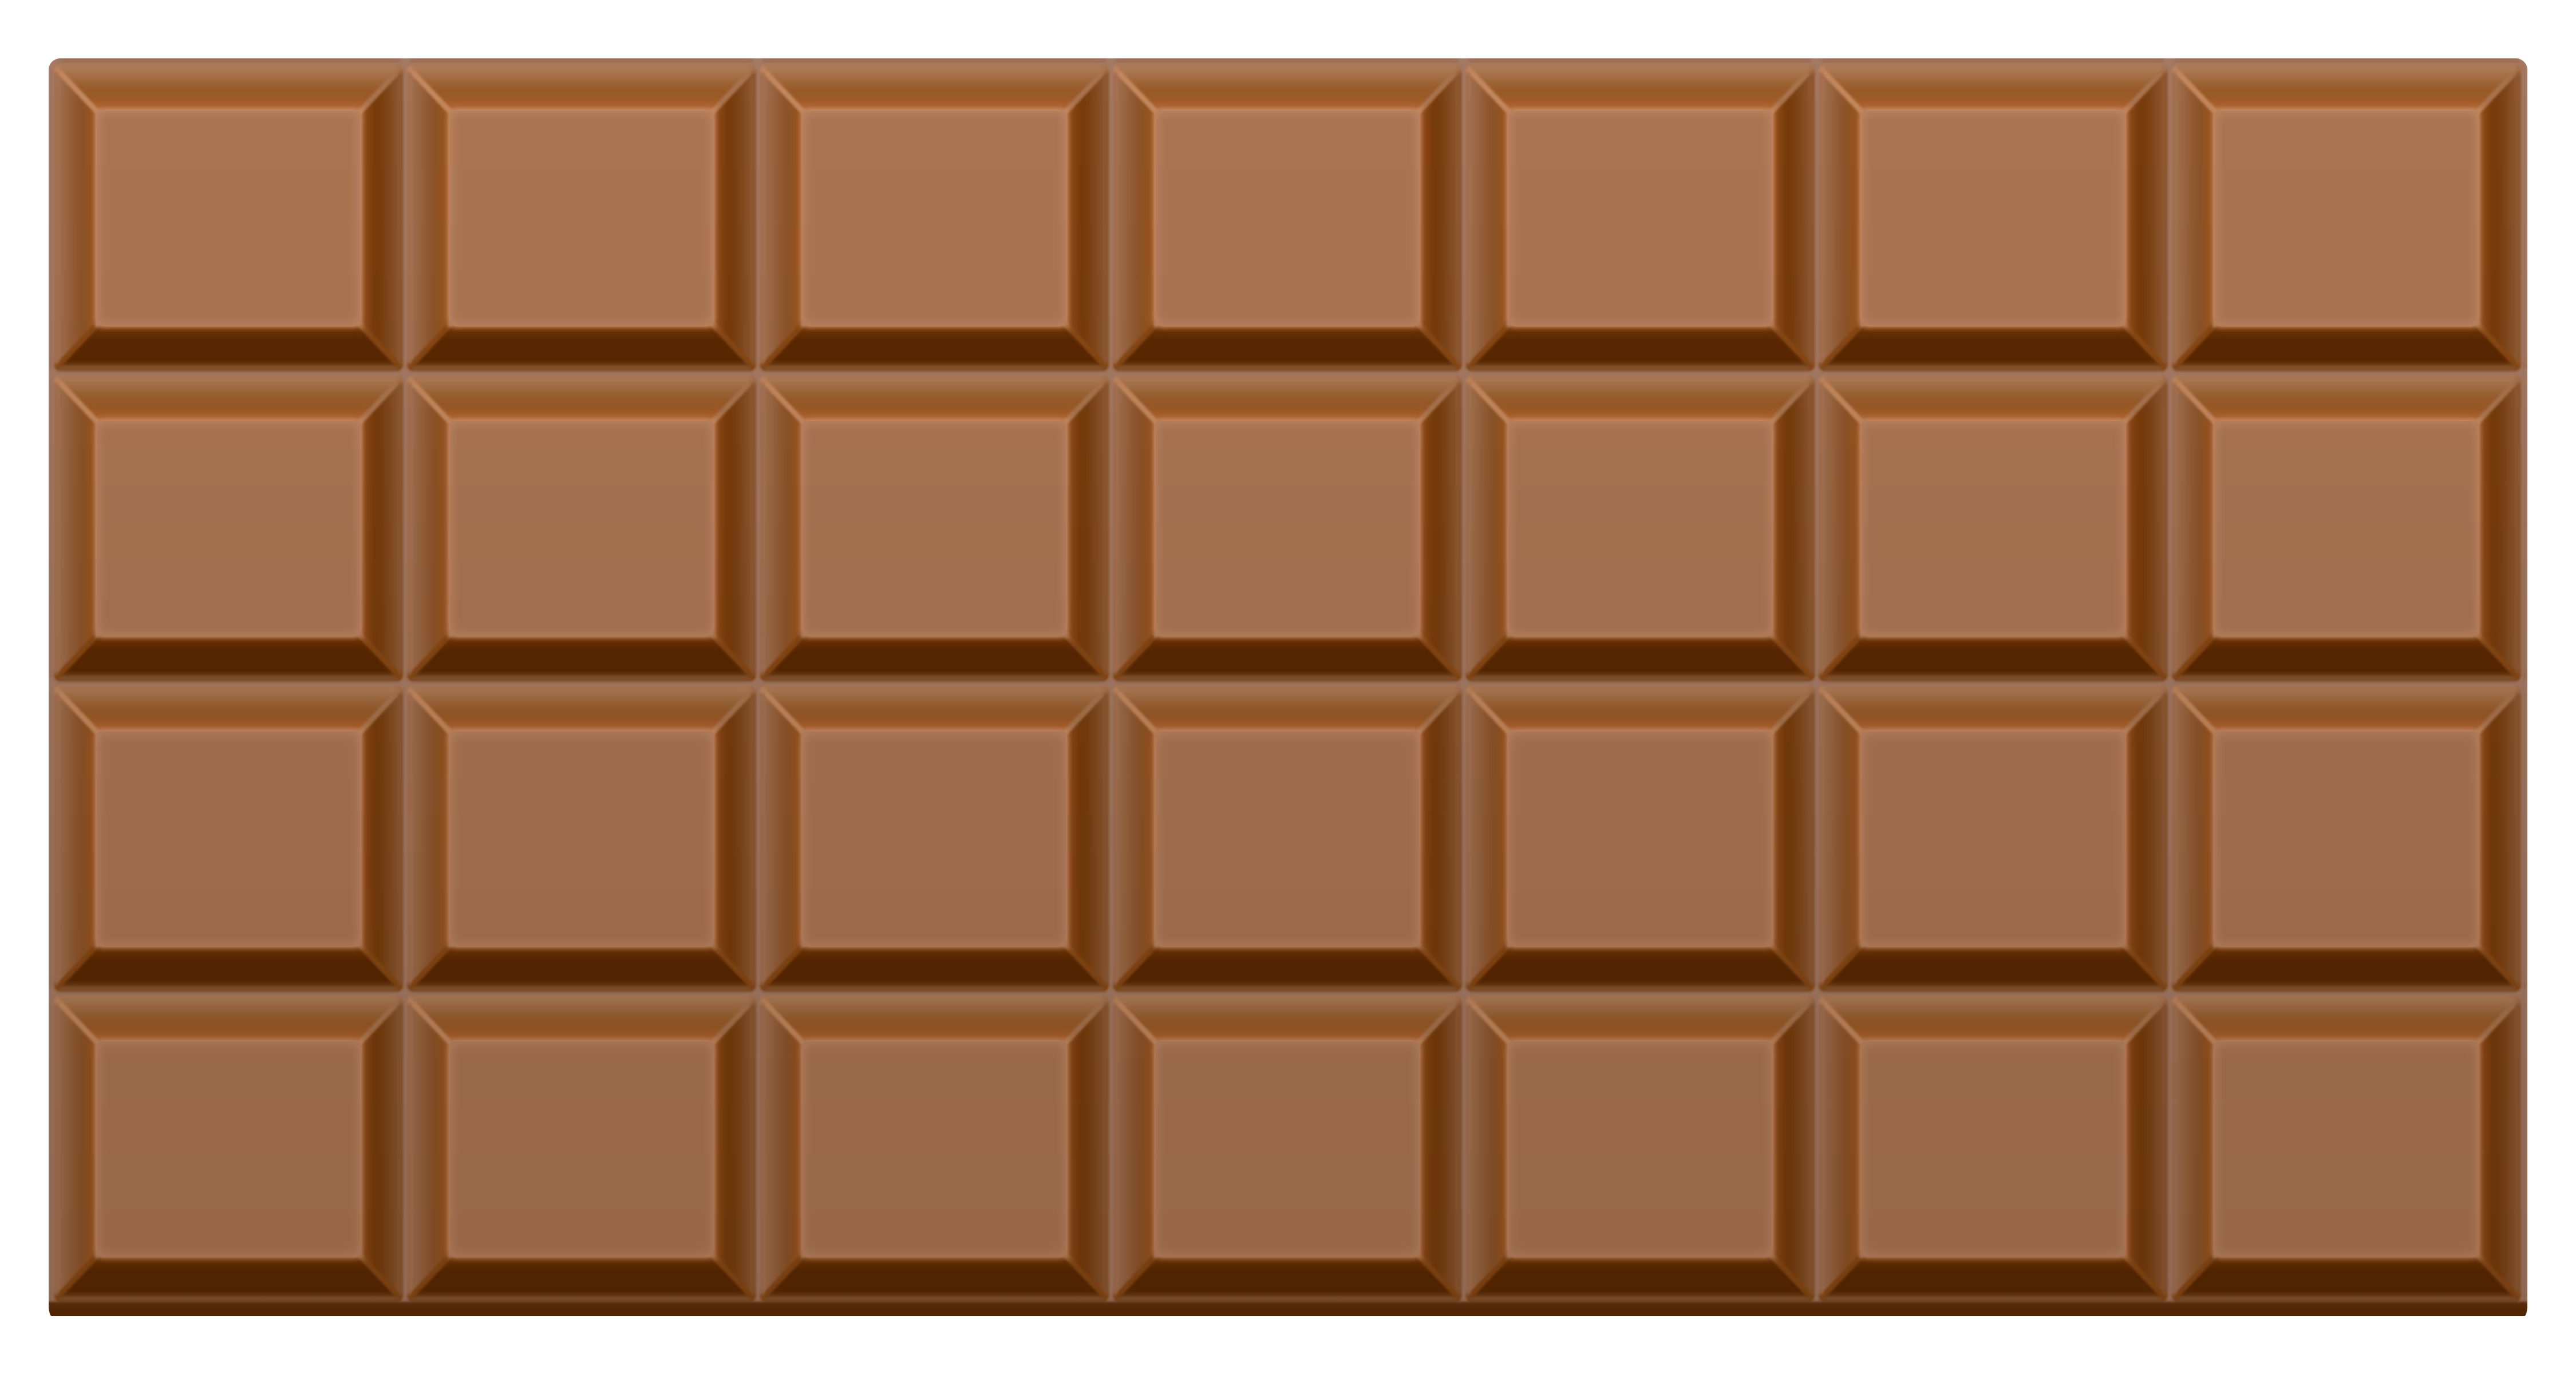 Chocolate Overload